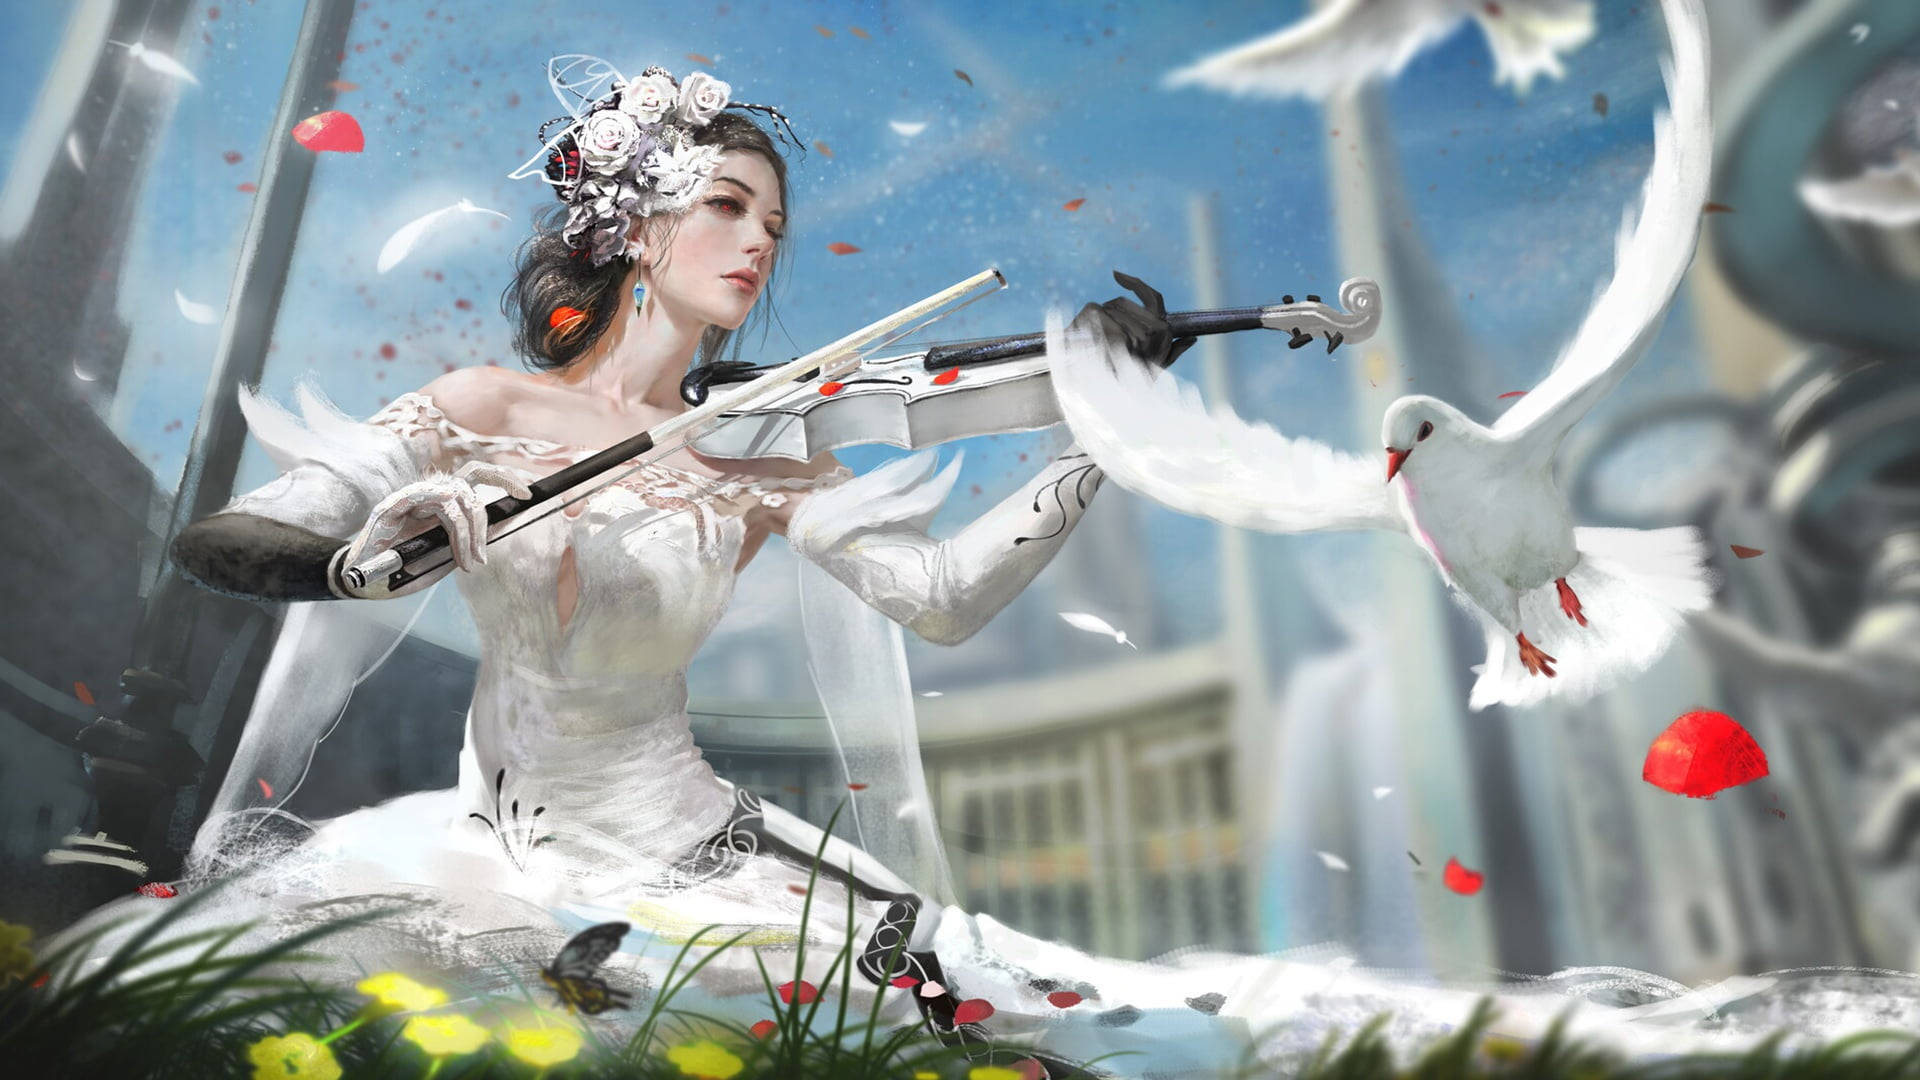 White Dove Digital Art Background